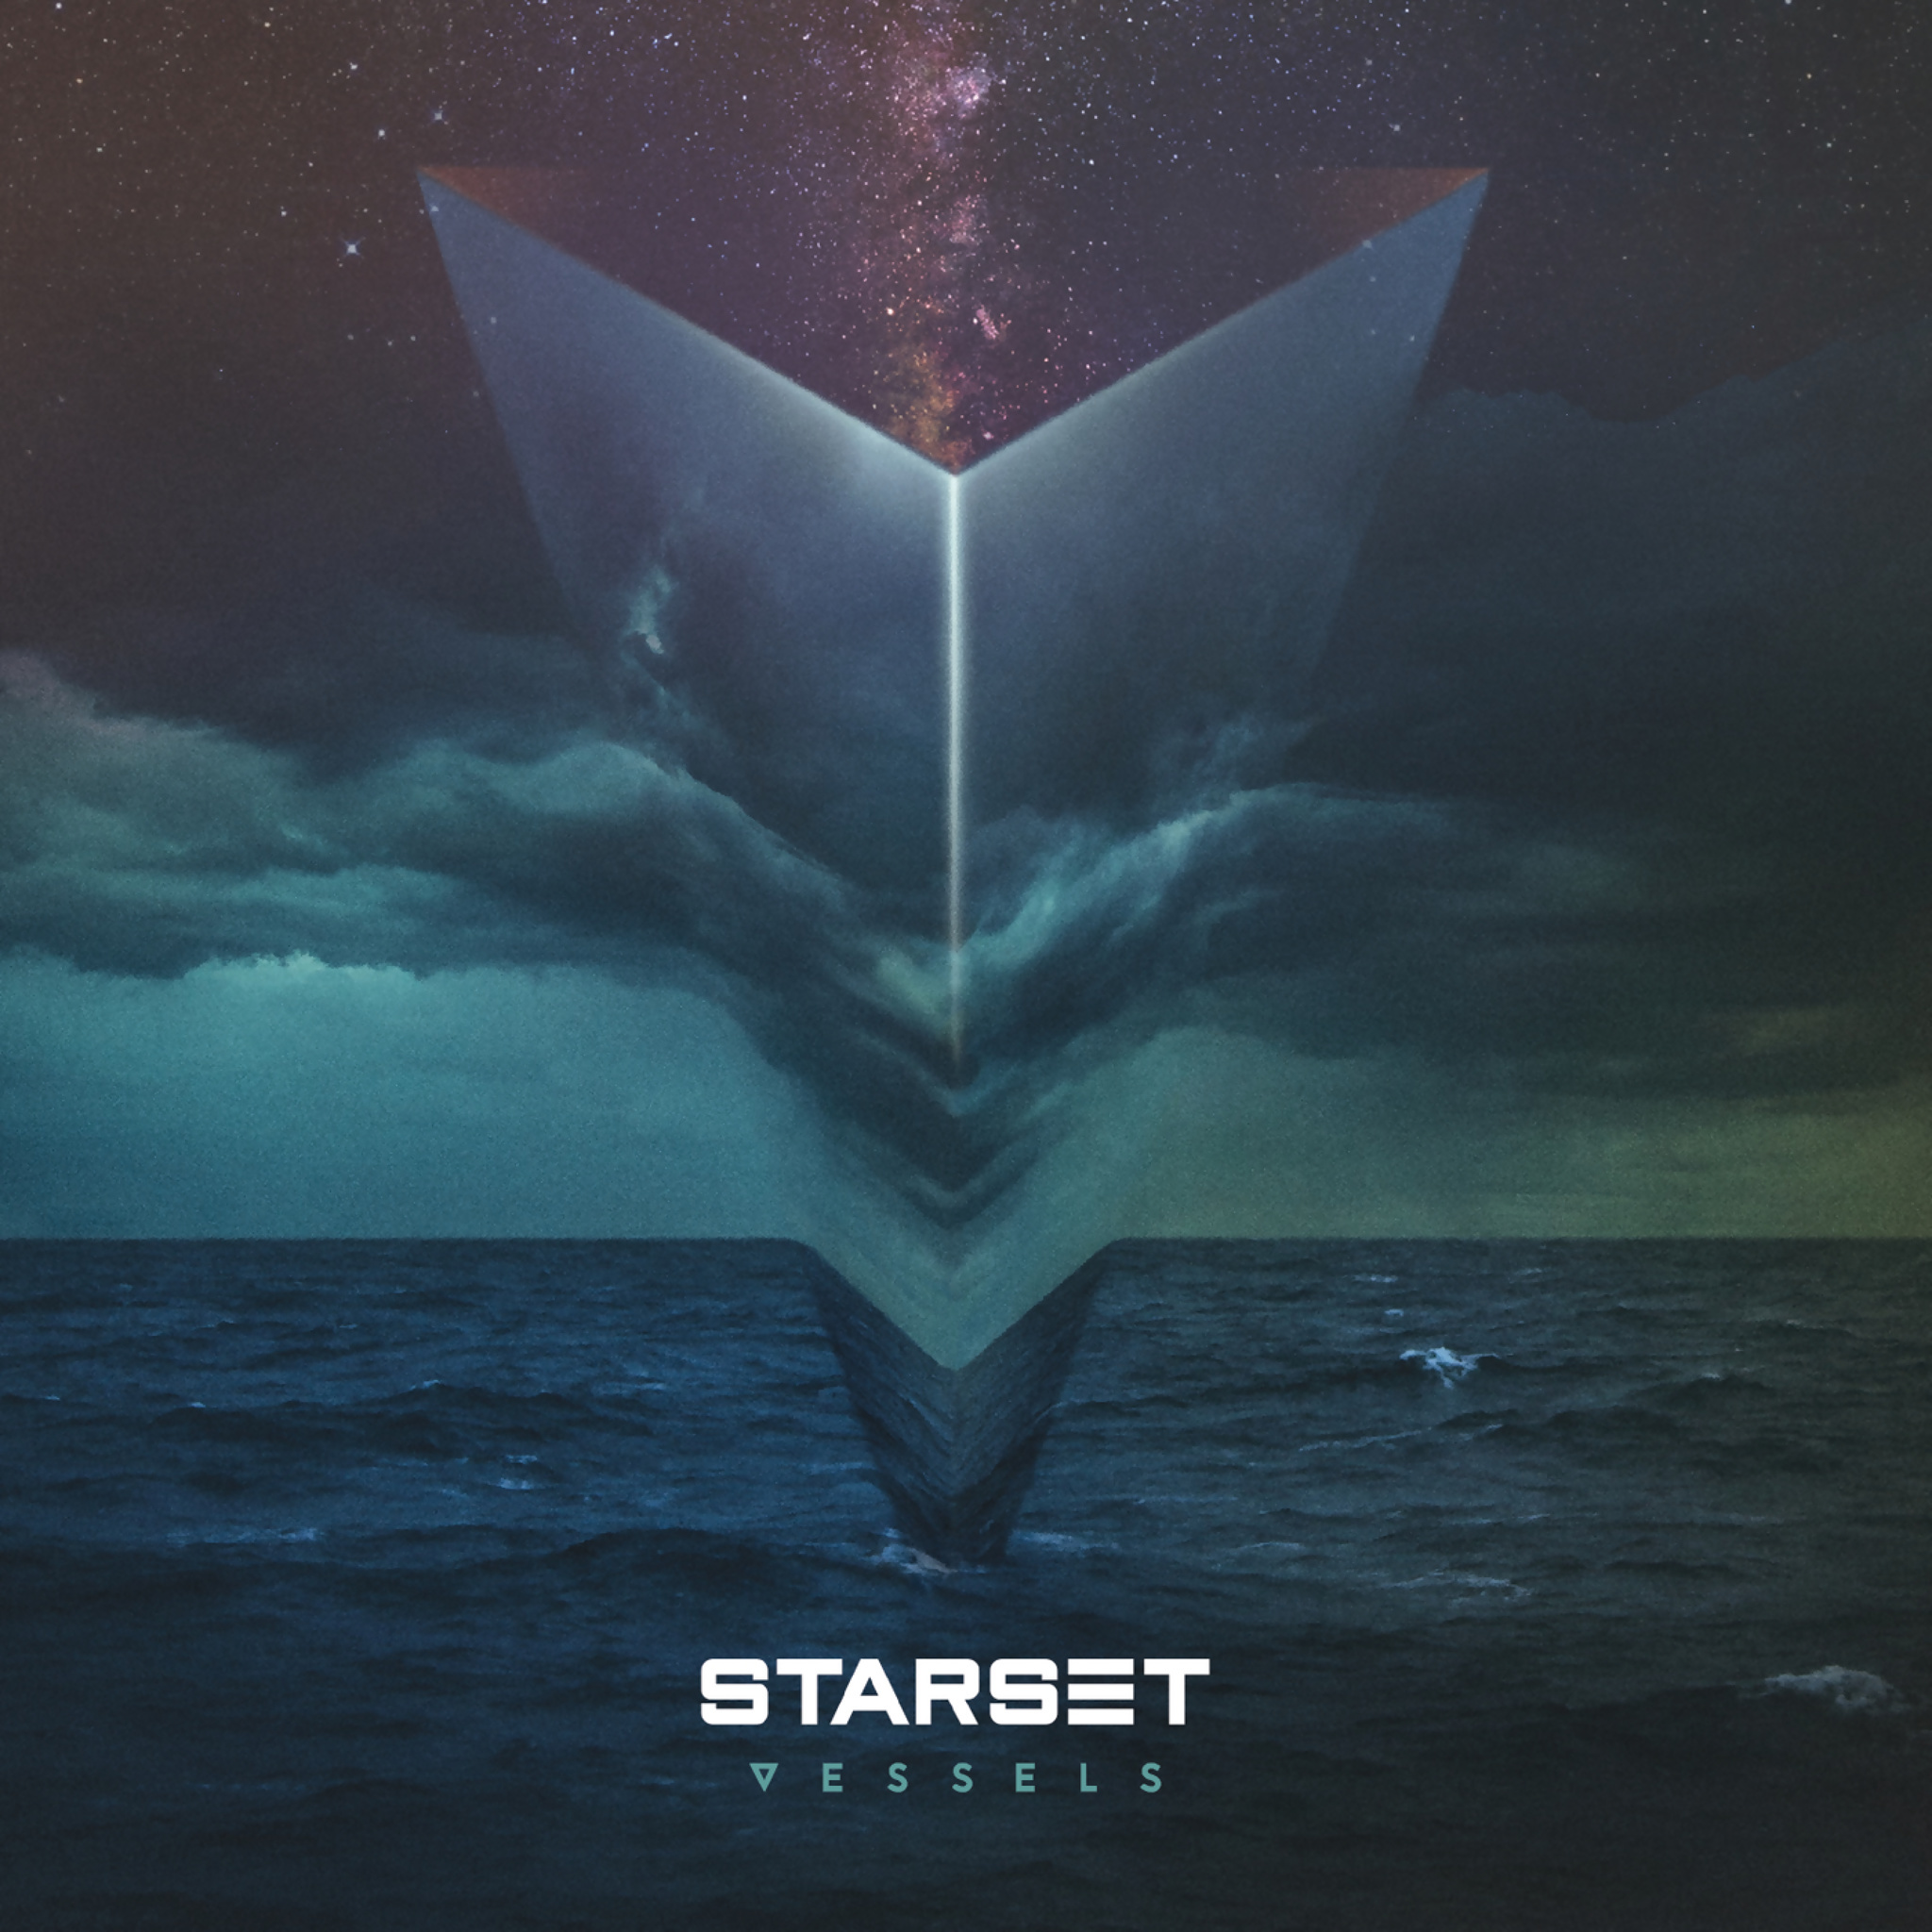 Starset - Vessels (2017) Album Info